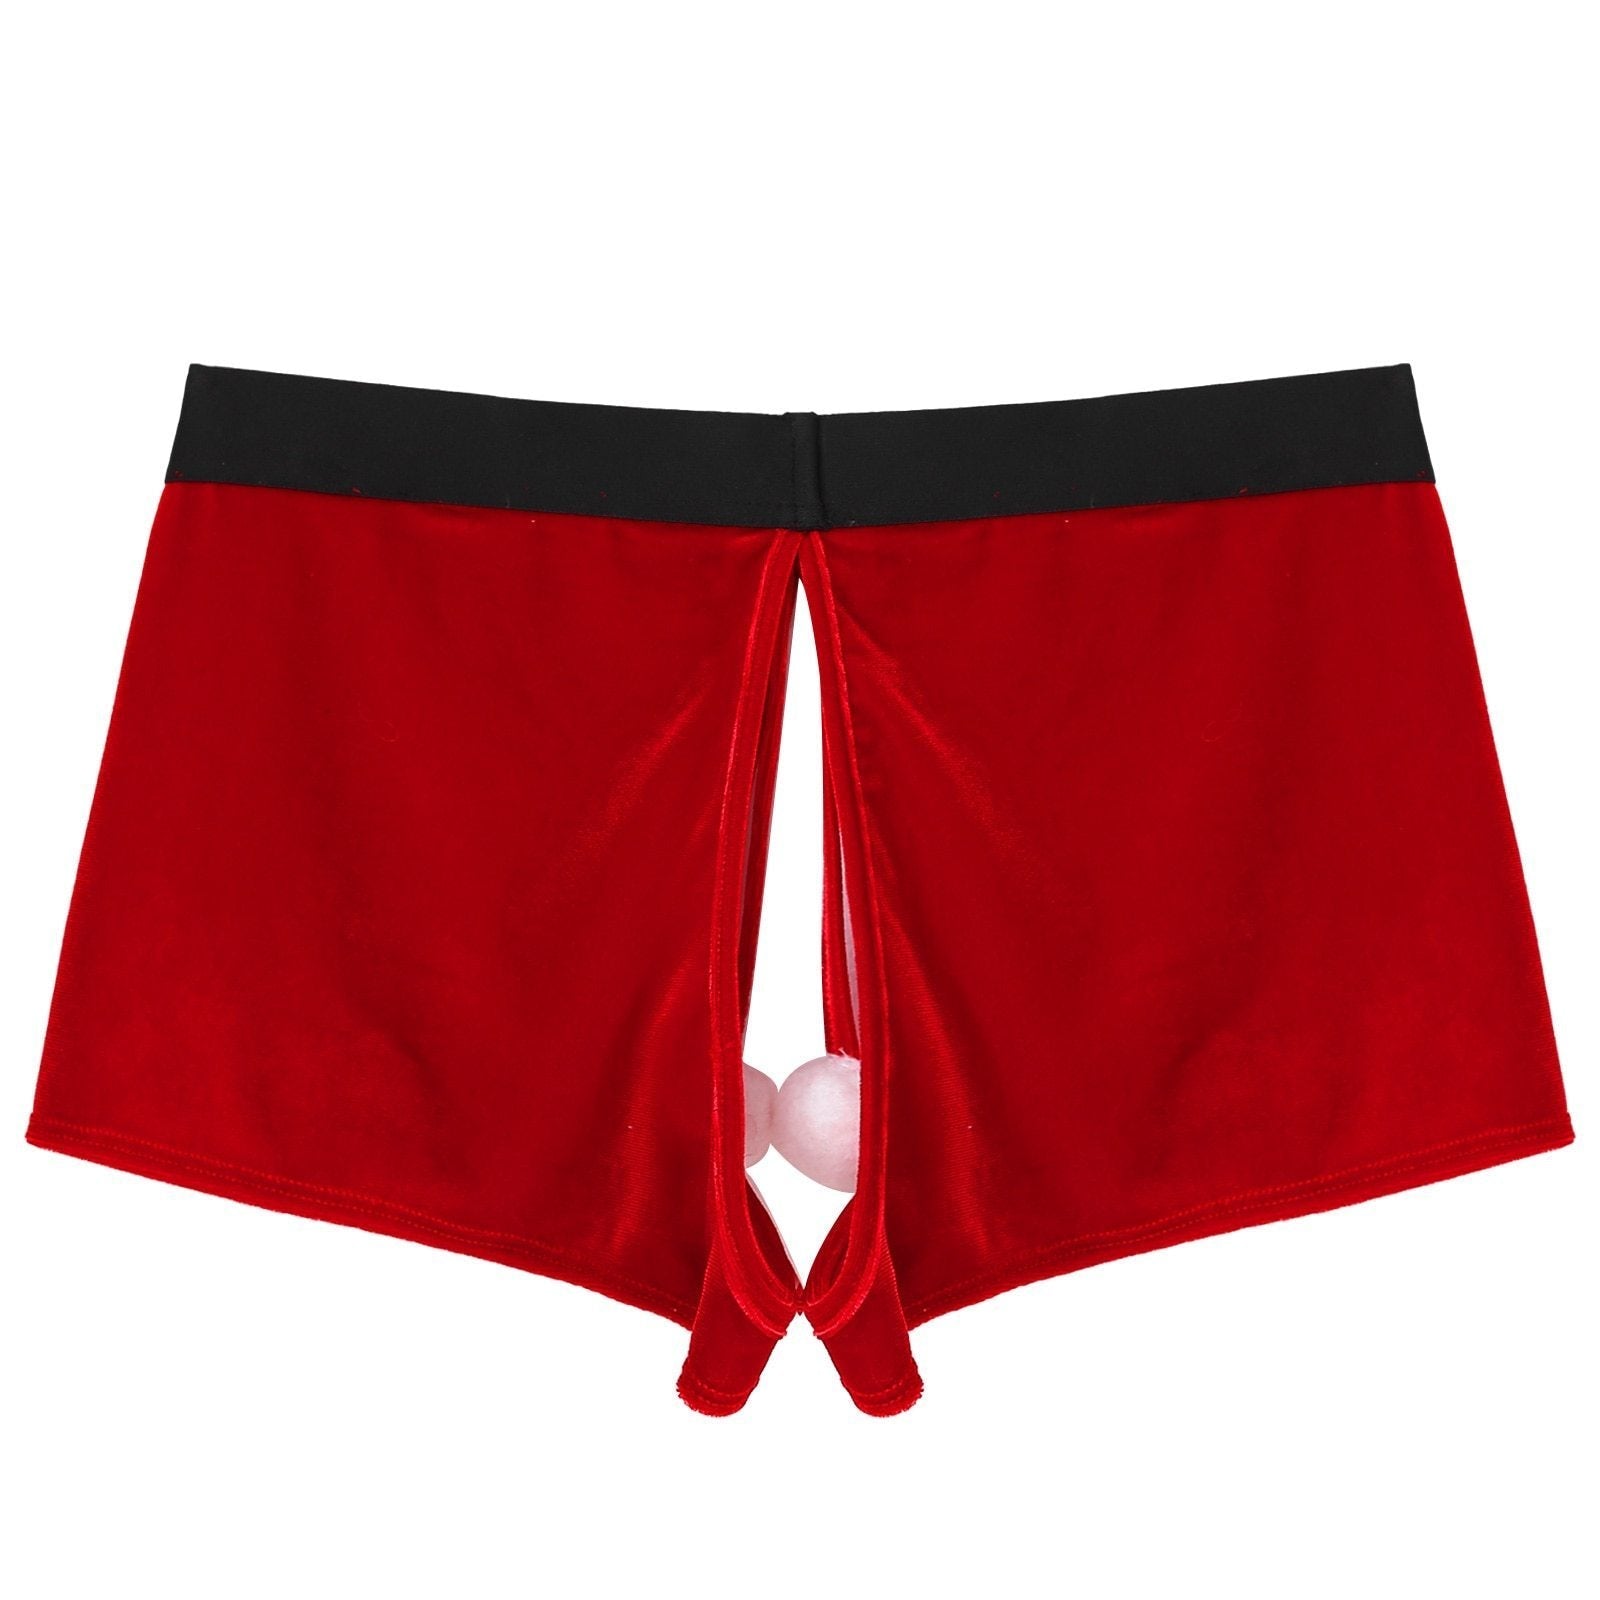 SALE - XMAS GIFT - Mens Christmas Naughty Santa Boxer Shorts with Open Crotch